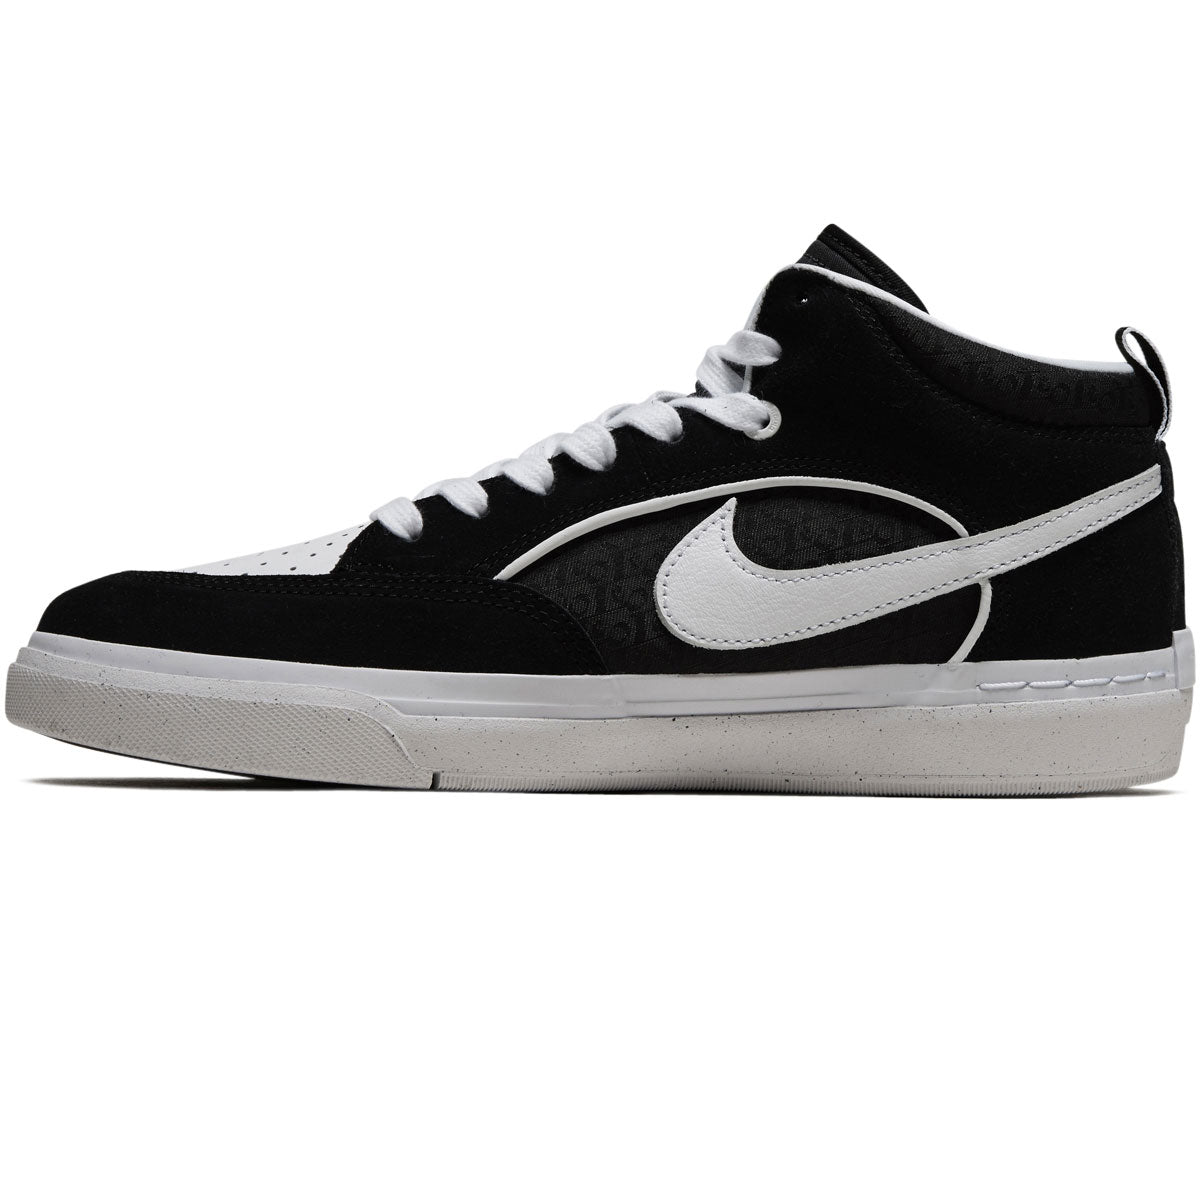 Nike SB React Leo Shoes - Black/White/Black/Gum Light Brown image 2